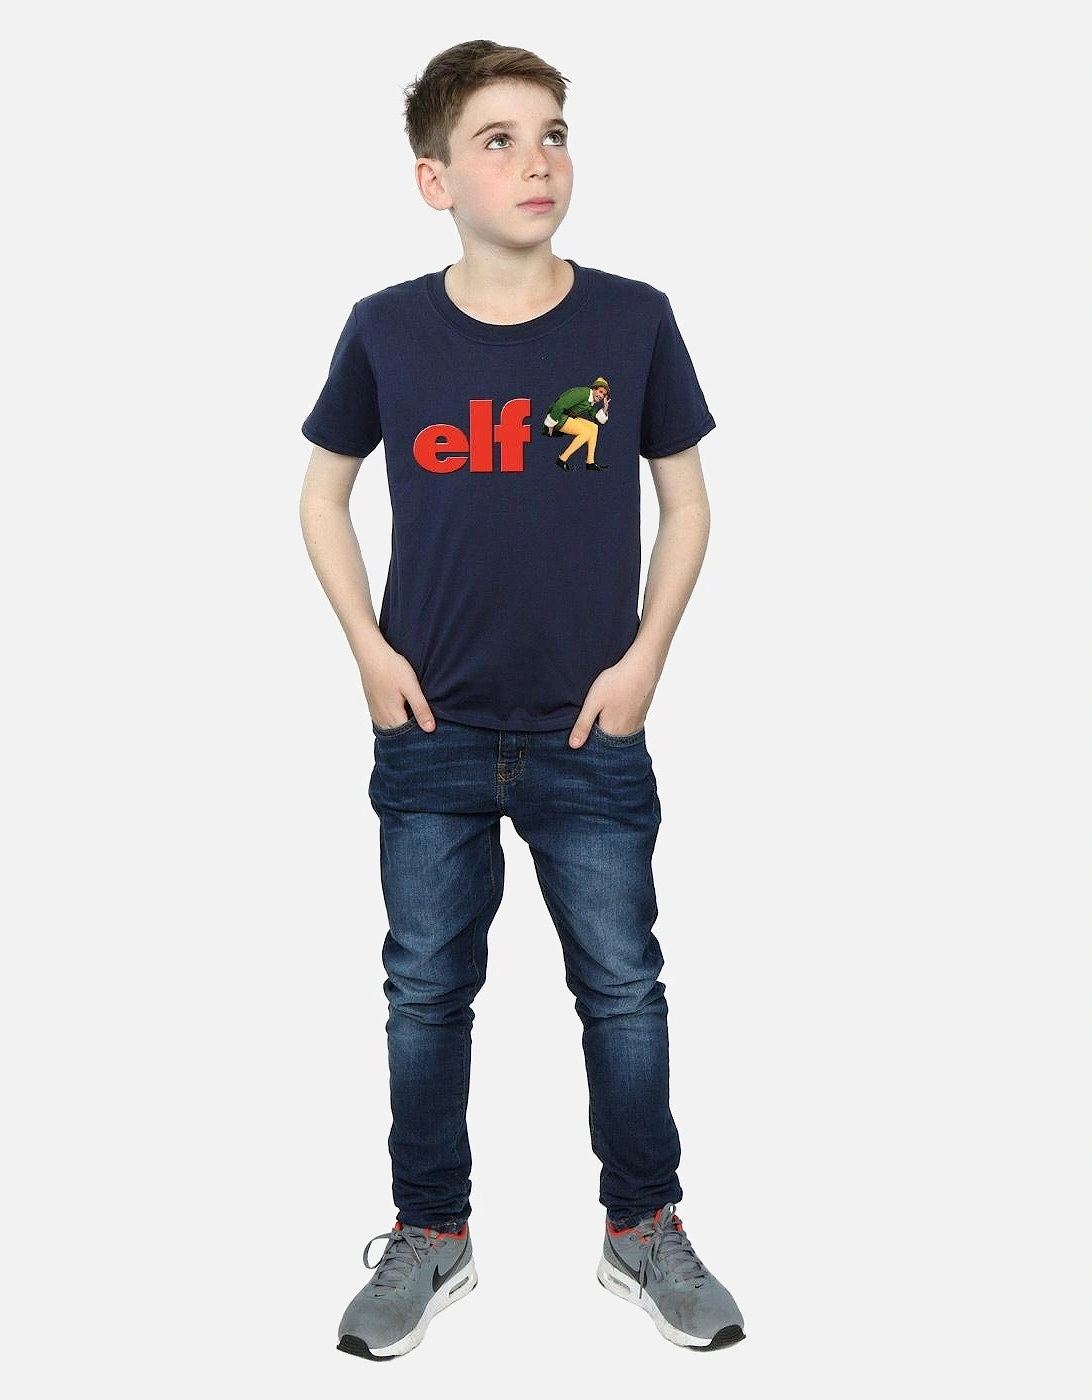 Boys Crouching Logo T-Shirt